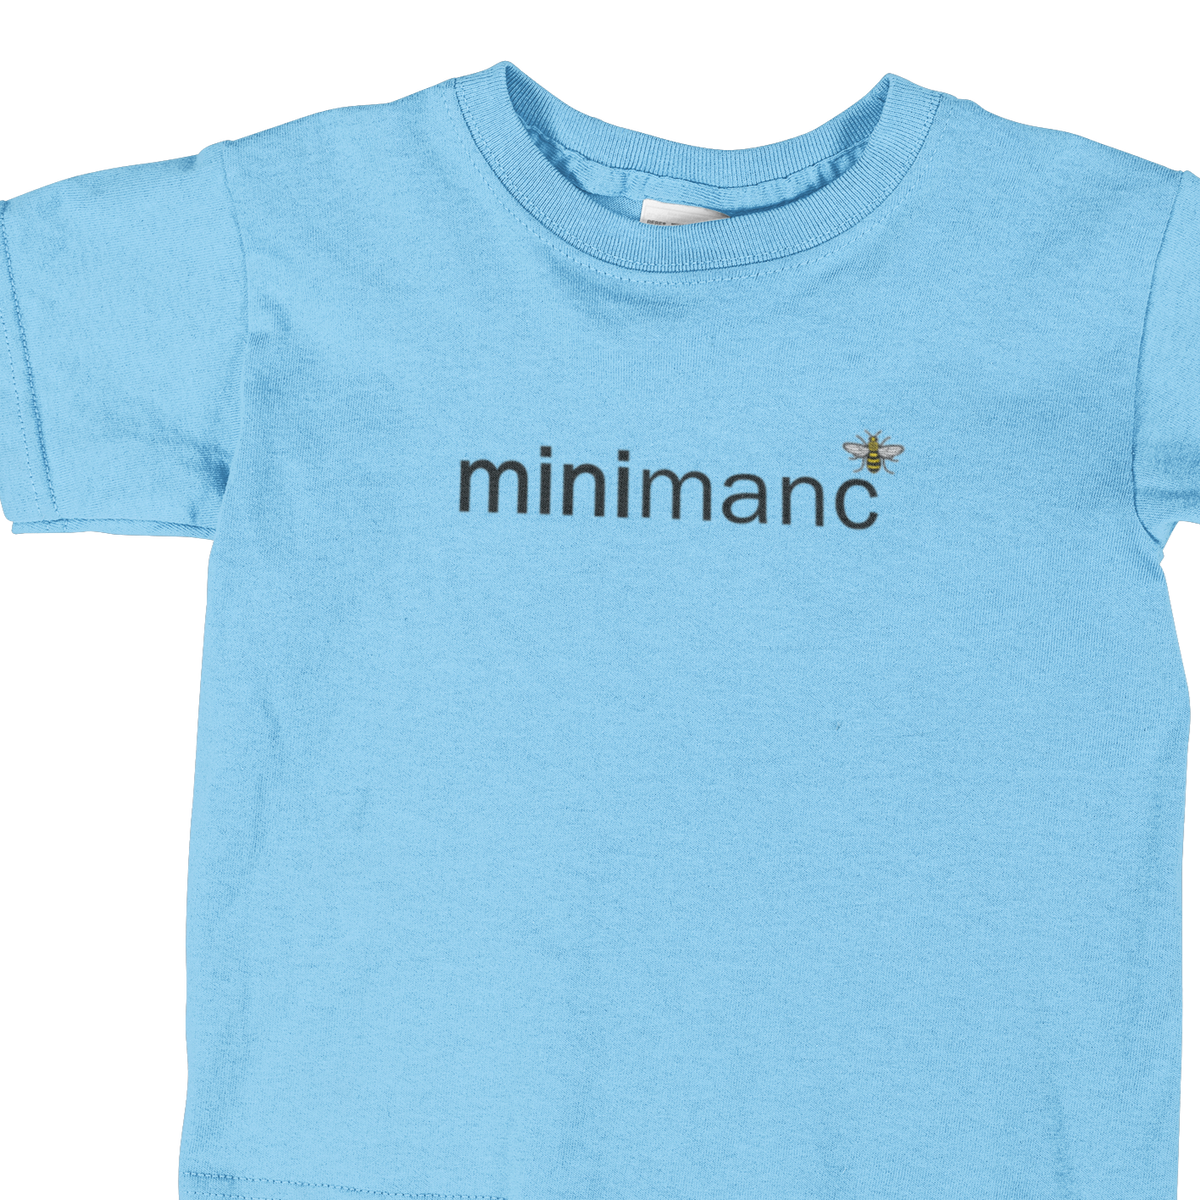 MiniManc T-Shirt - Kids - Sky Blue NOW £10